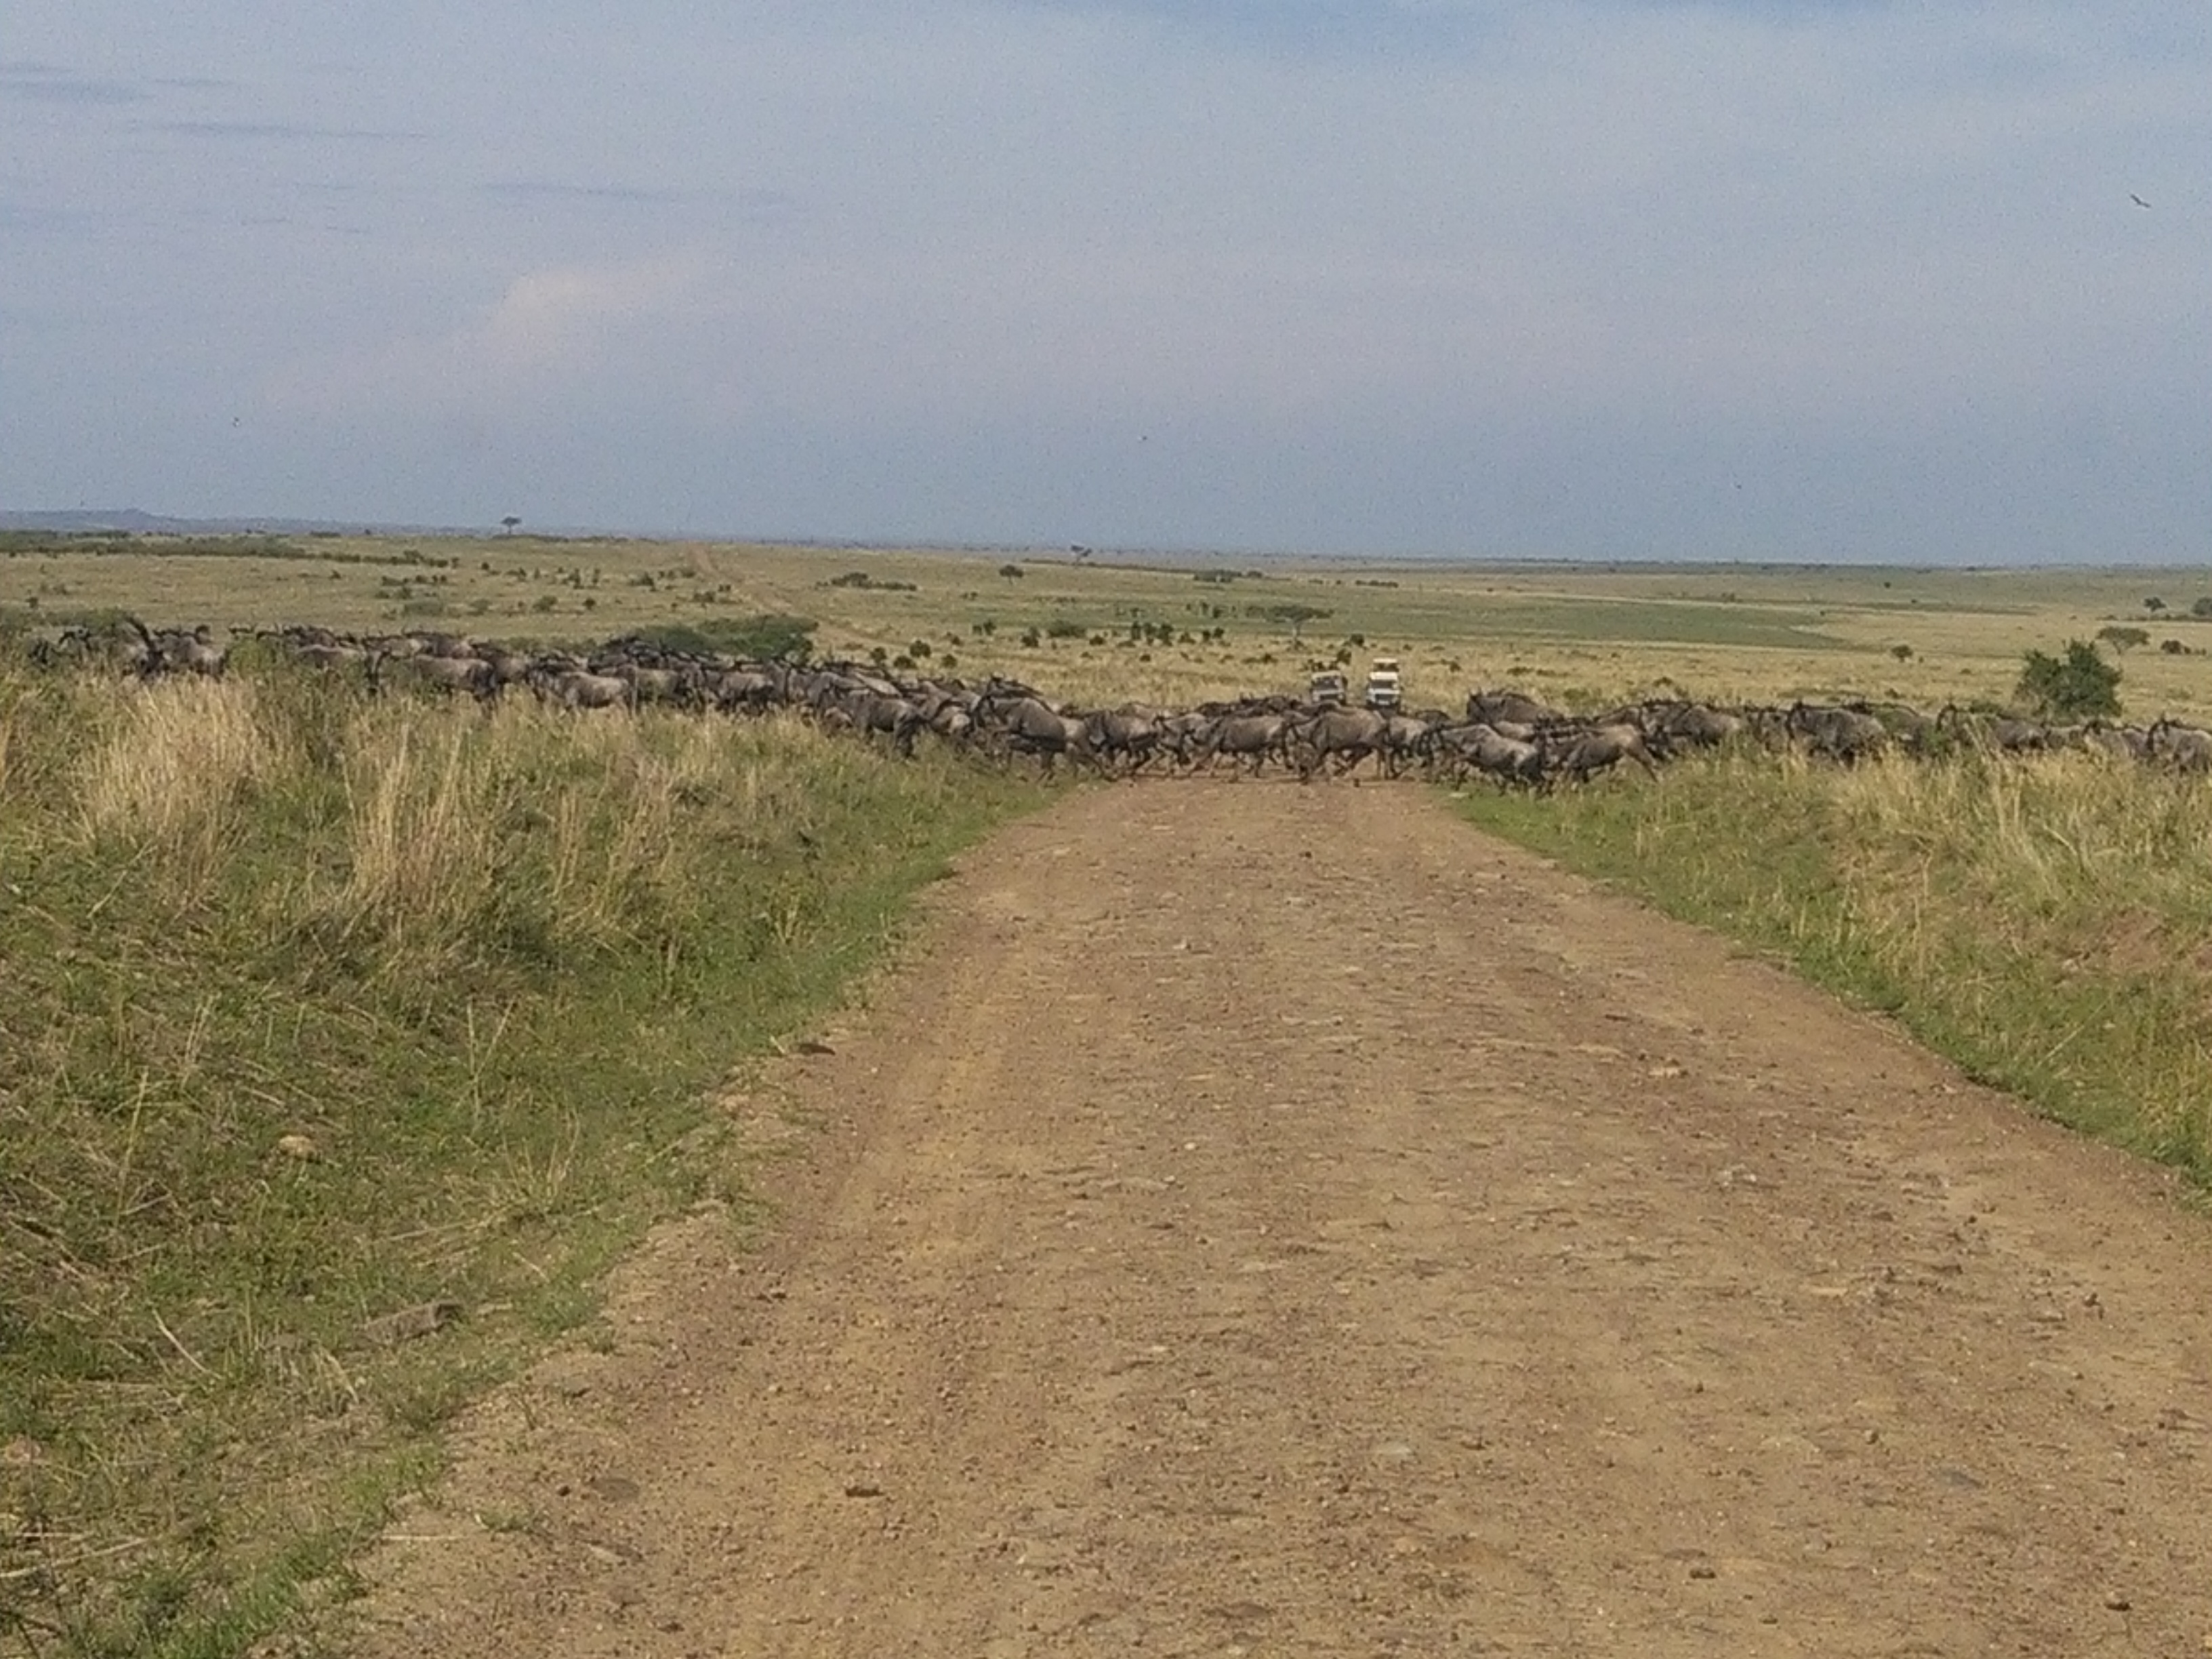 The great wildebeest migration in Masai Mara/Kenya Adventure Safaris.